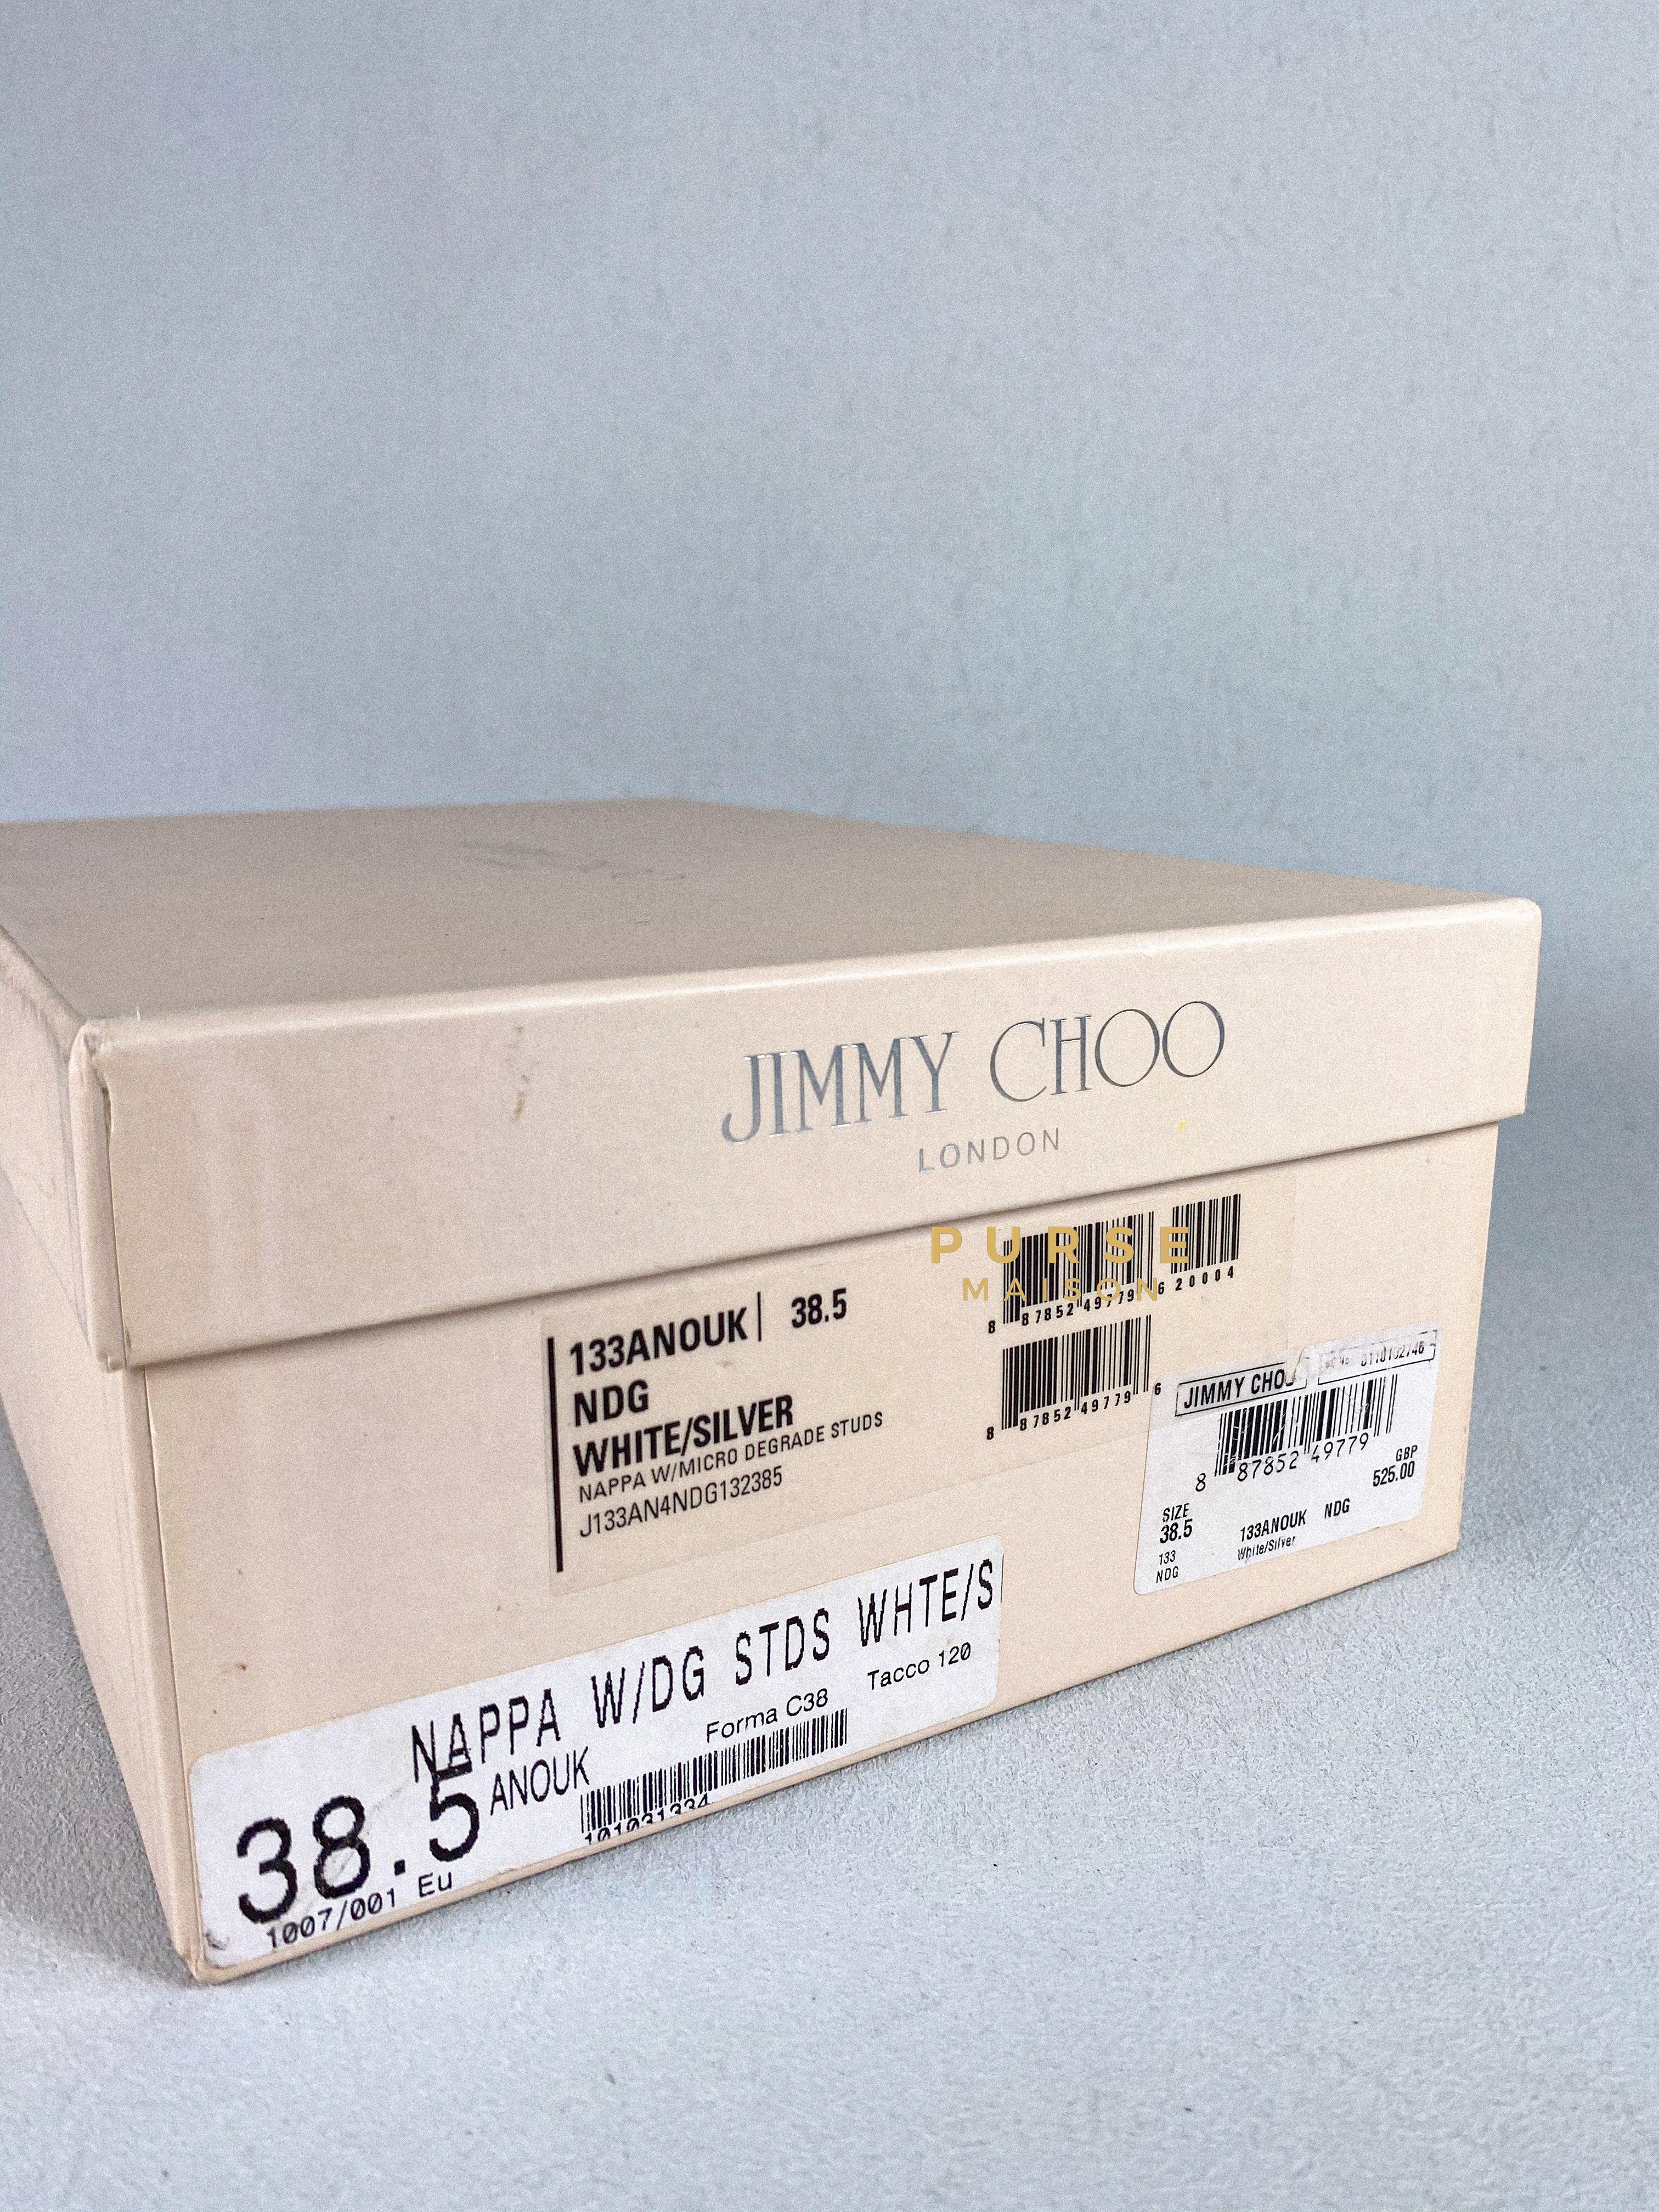 Jimmy Choo Anouk 120 Leather White/Silver Nappa Pumps High Heels Size 38.5 (27cm) | Purse Maison Luxury Bags Shop